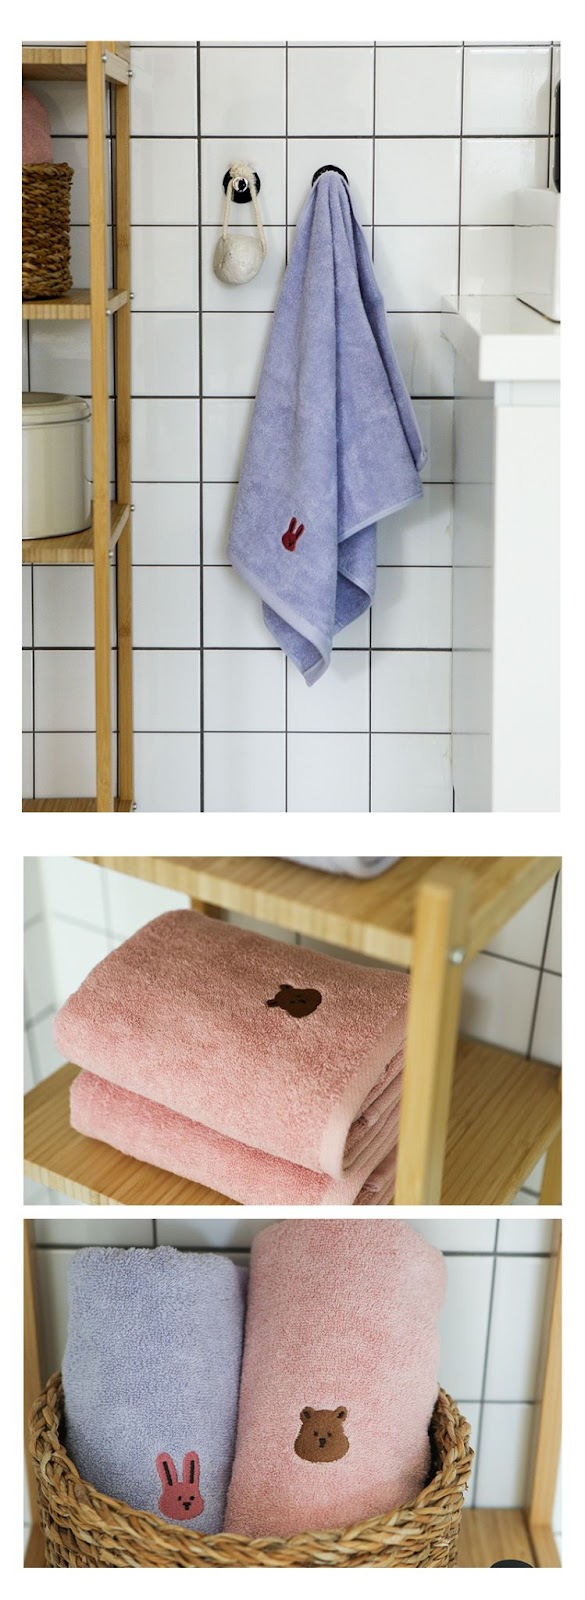 韓國 DAILYLIKE 標誌刺繡毛巾 Dinosaur 2 sheets